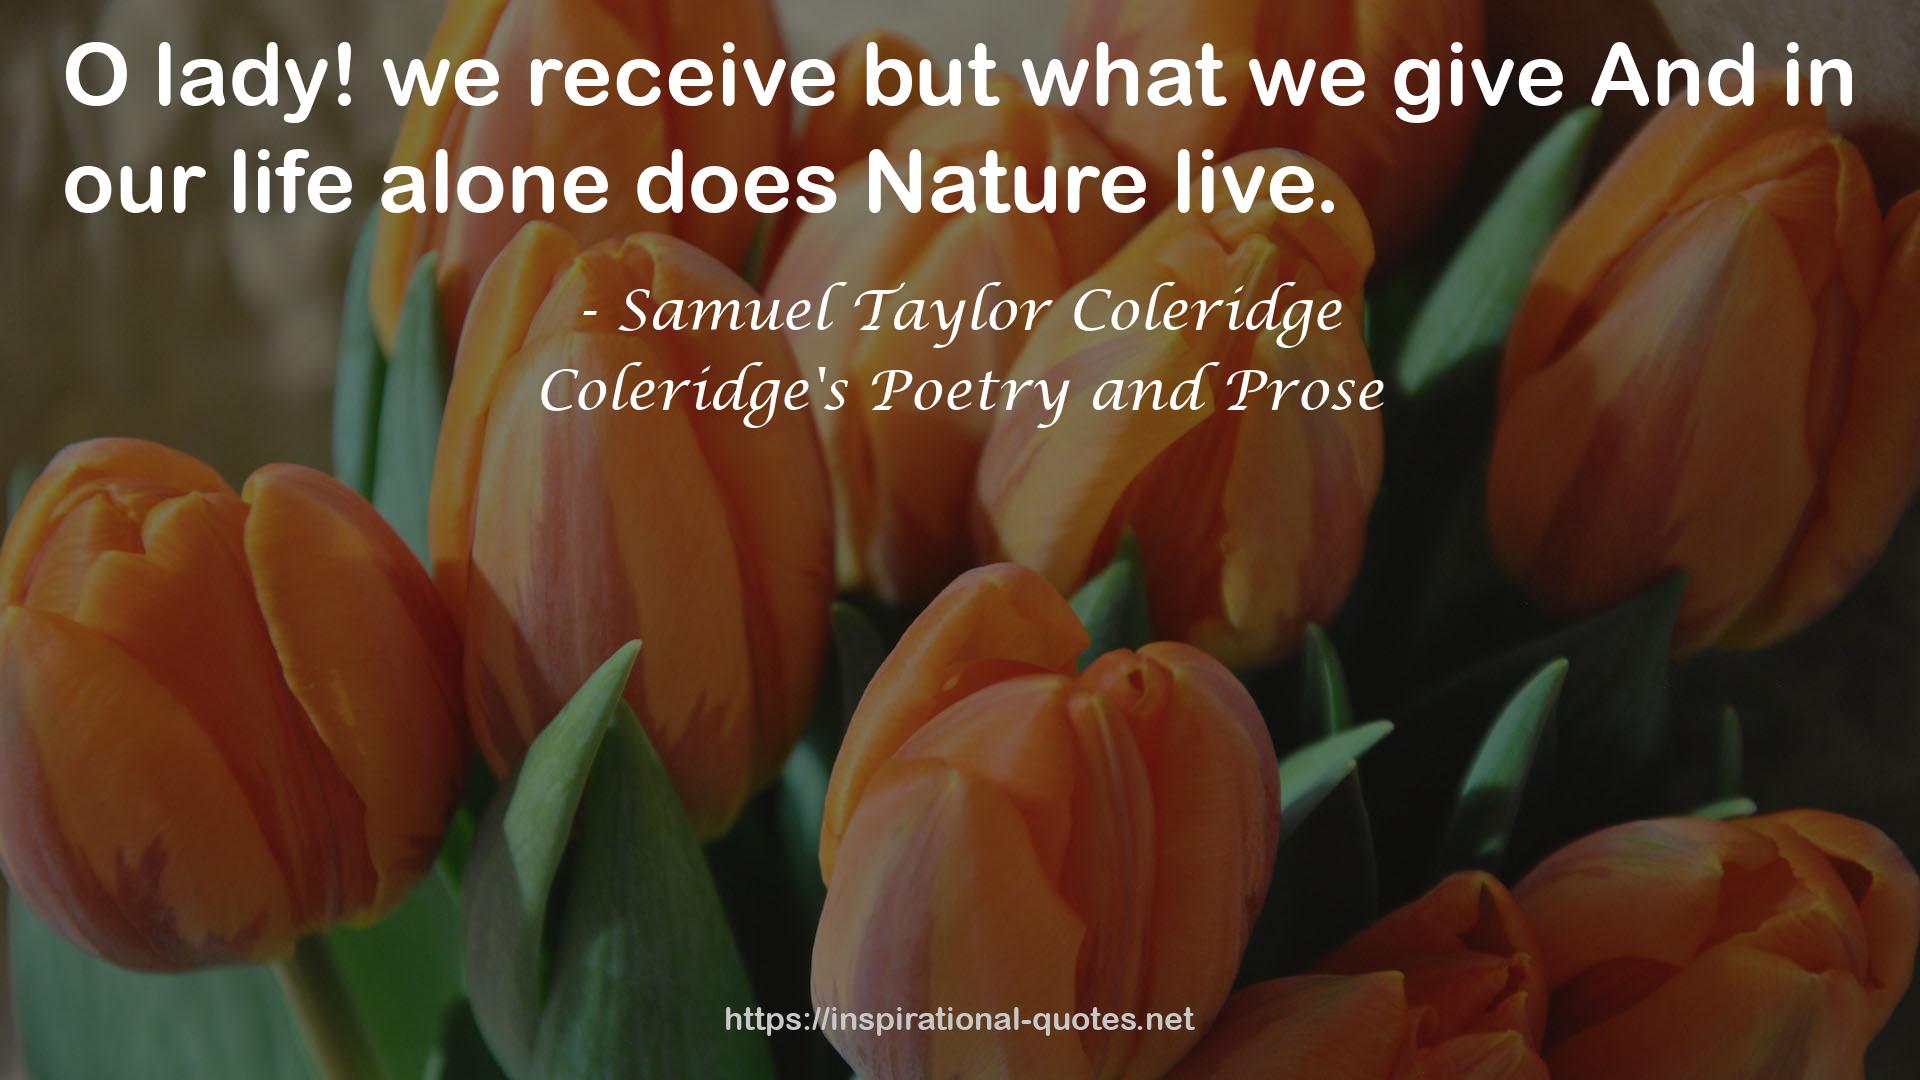 Coleridge's Poetry and Prose QUOTES